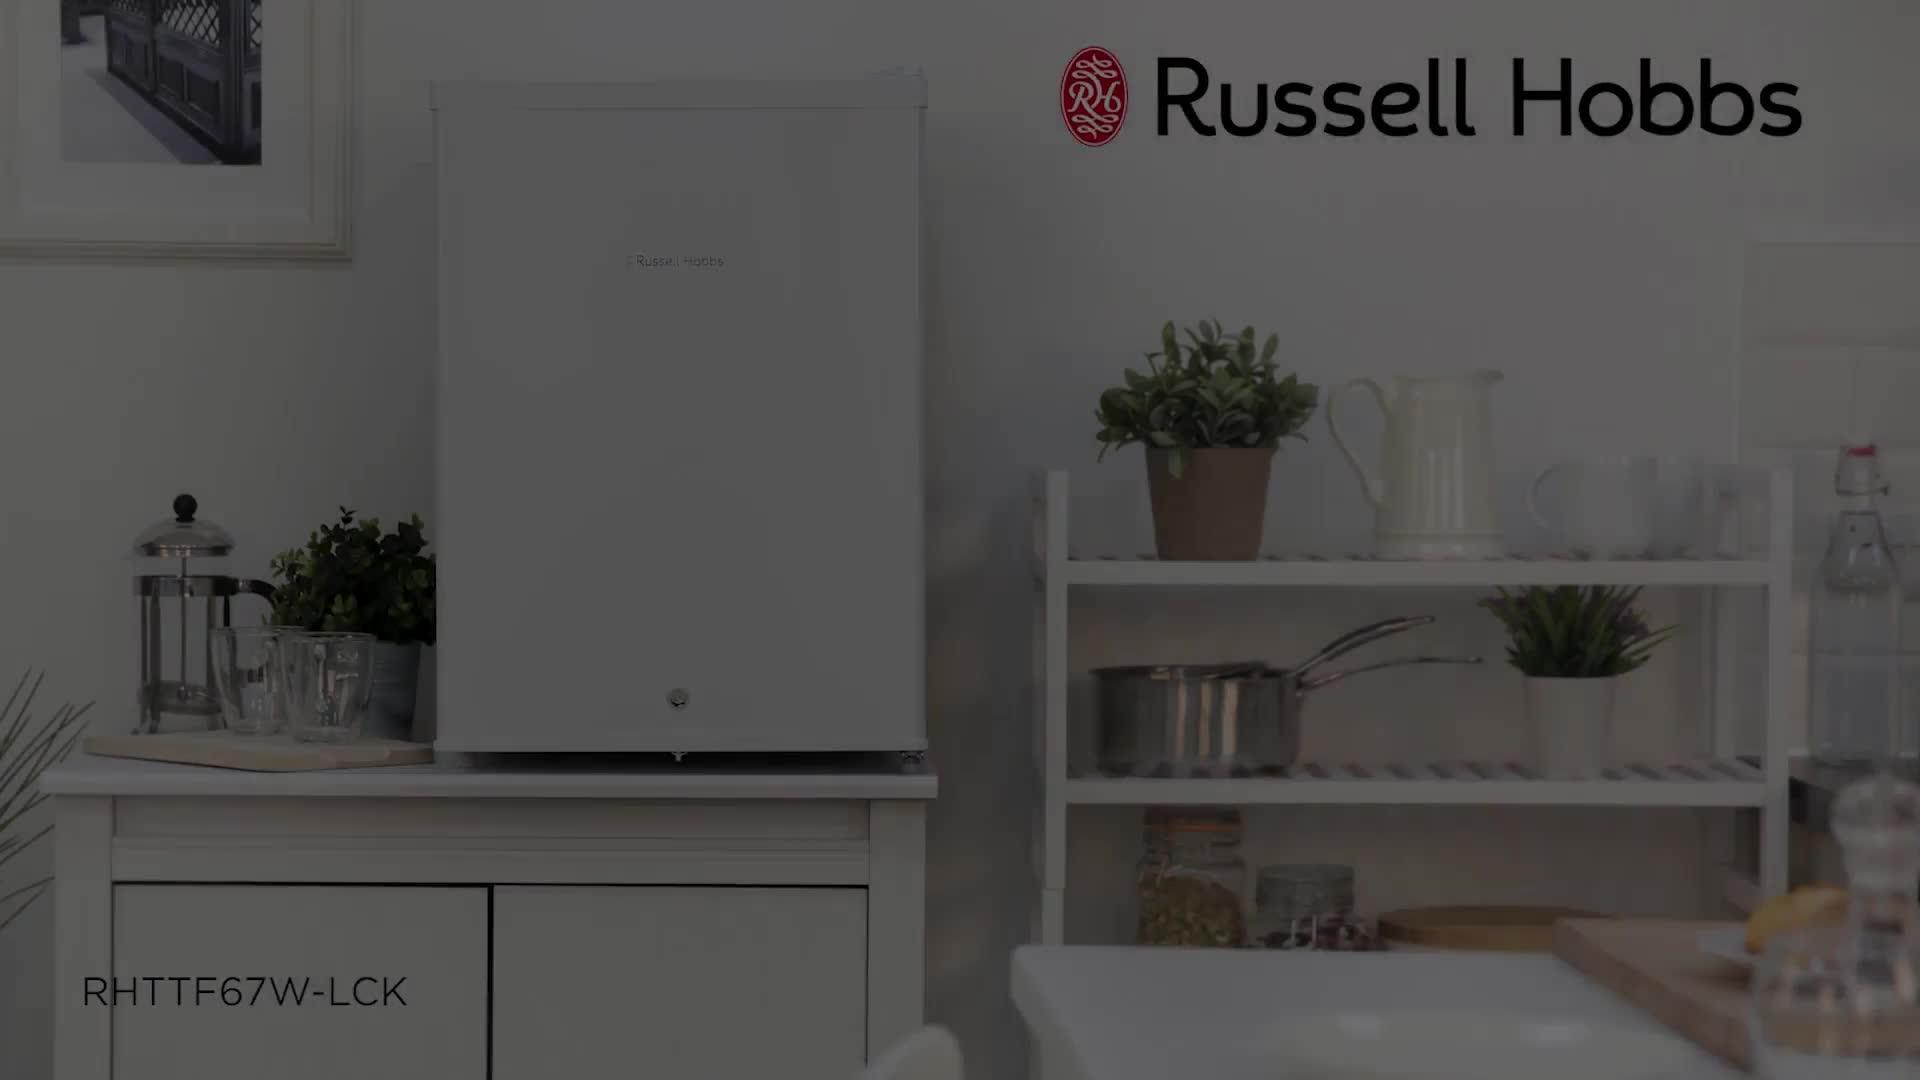 Russell Hobbs RHTTF67W-LCK Under Counter Mini Fridge Cooler - White